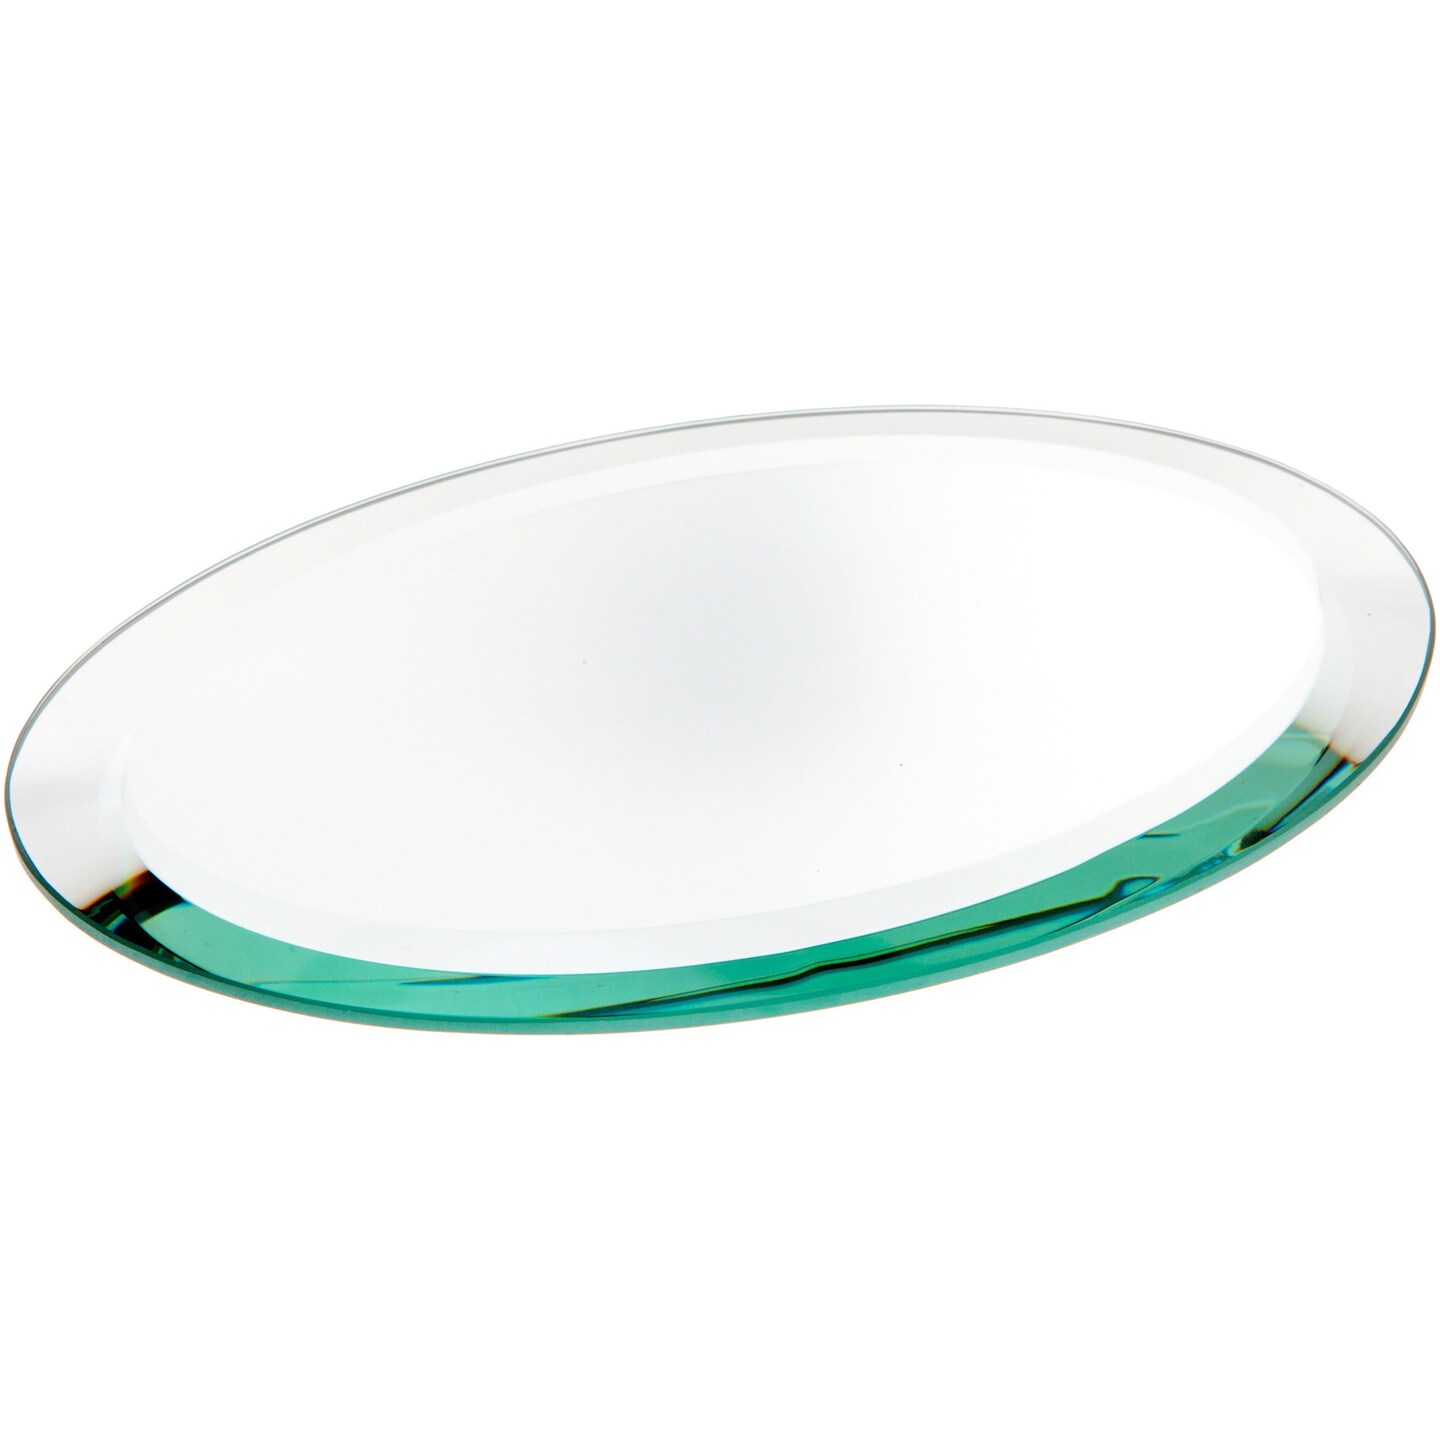 Plymor Oval 5mm Beveled Glass Mirror, 5 inch x 7 inch